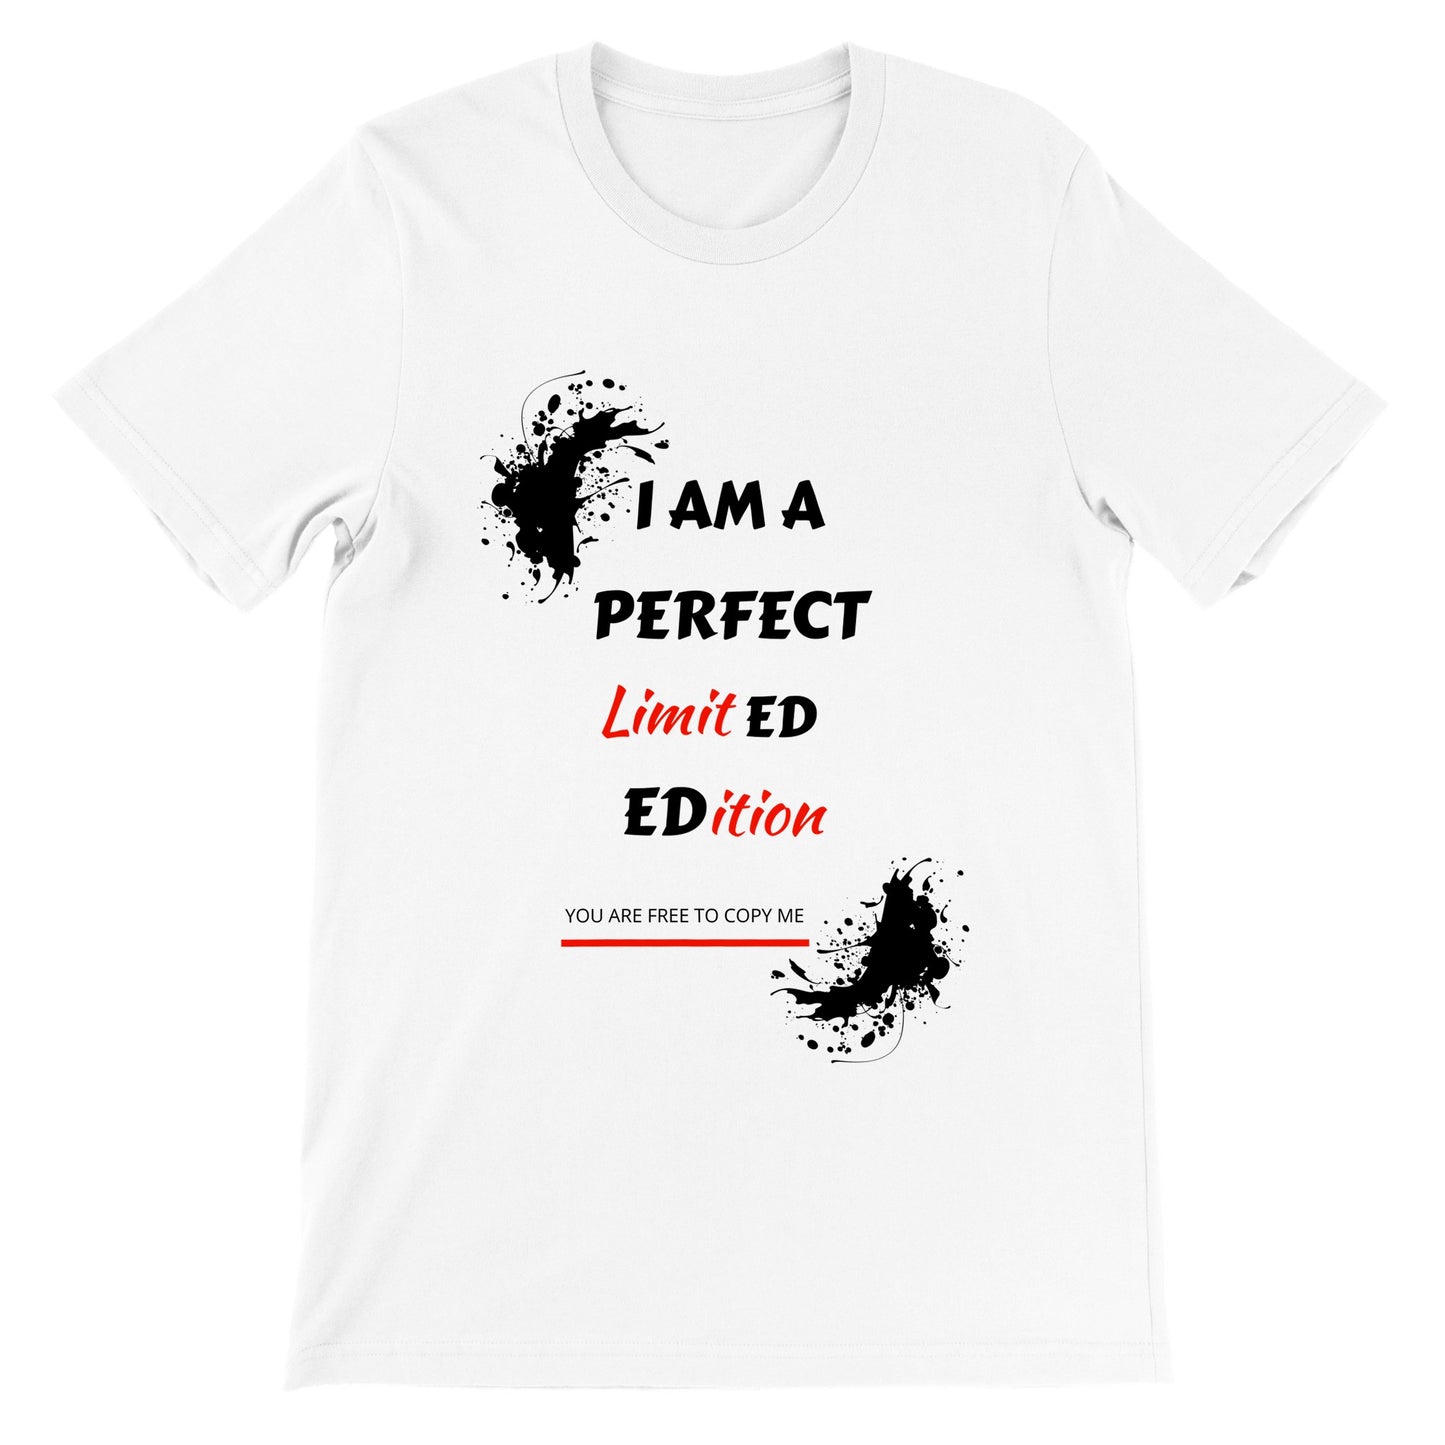 Inspirational Men T-shirt: I Am A Perfect Limited Edition